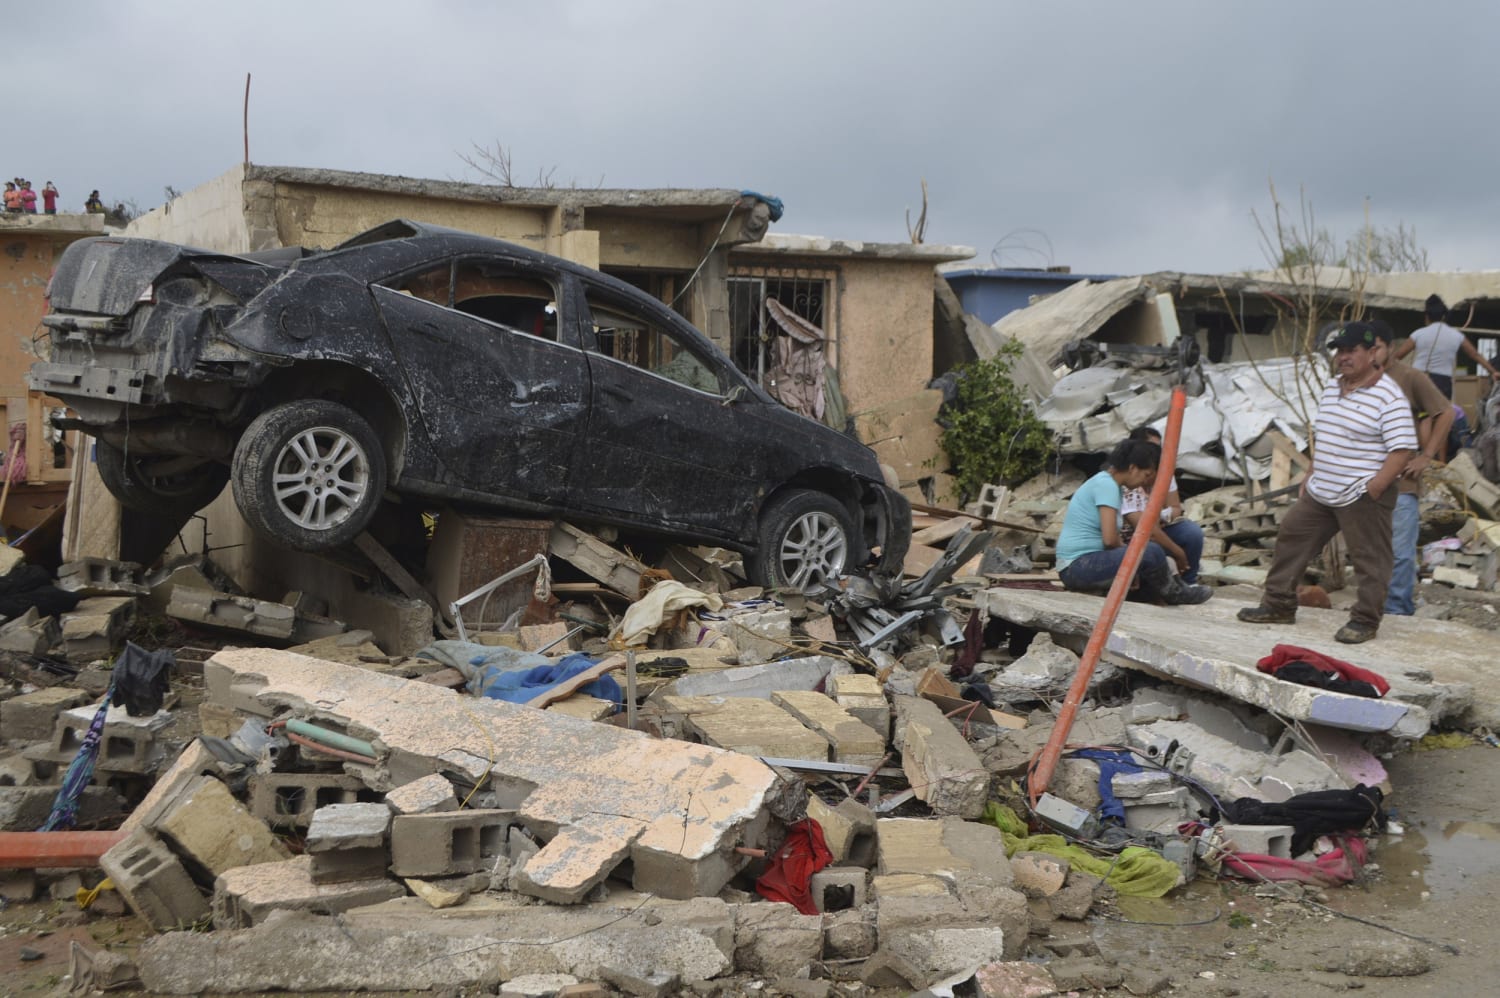 Mexico Border City Tornado Leaves 13 Dead, 230 Injured NBC News